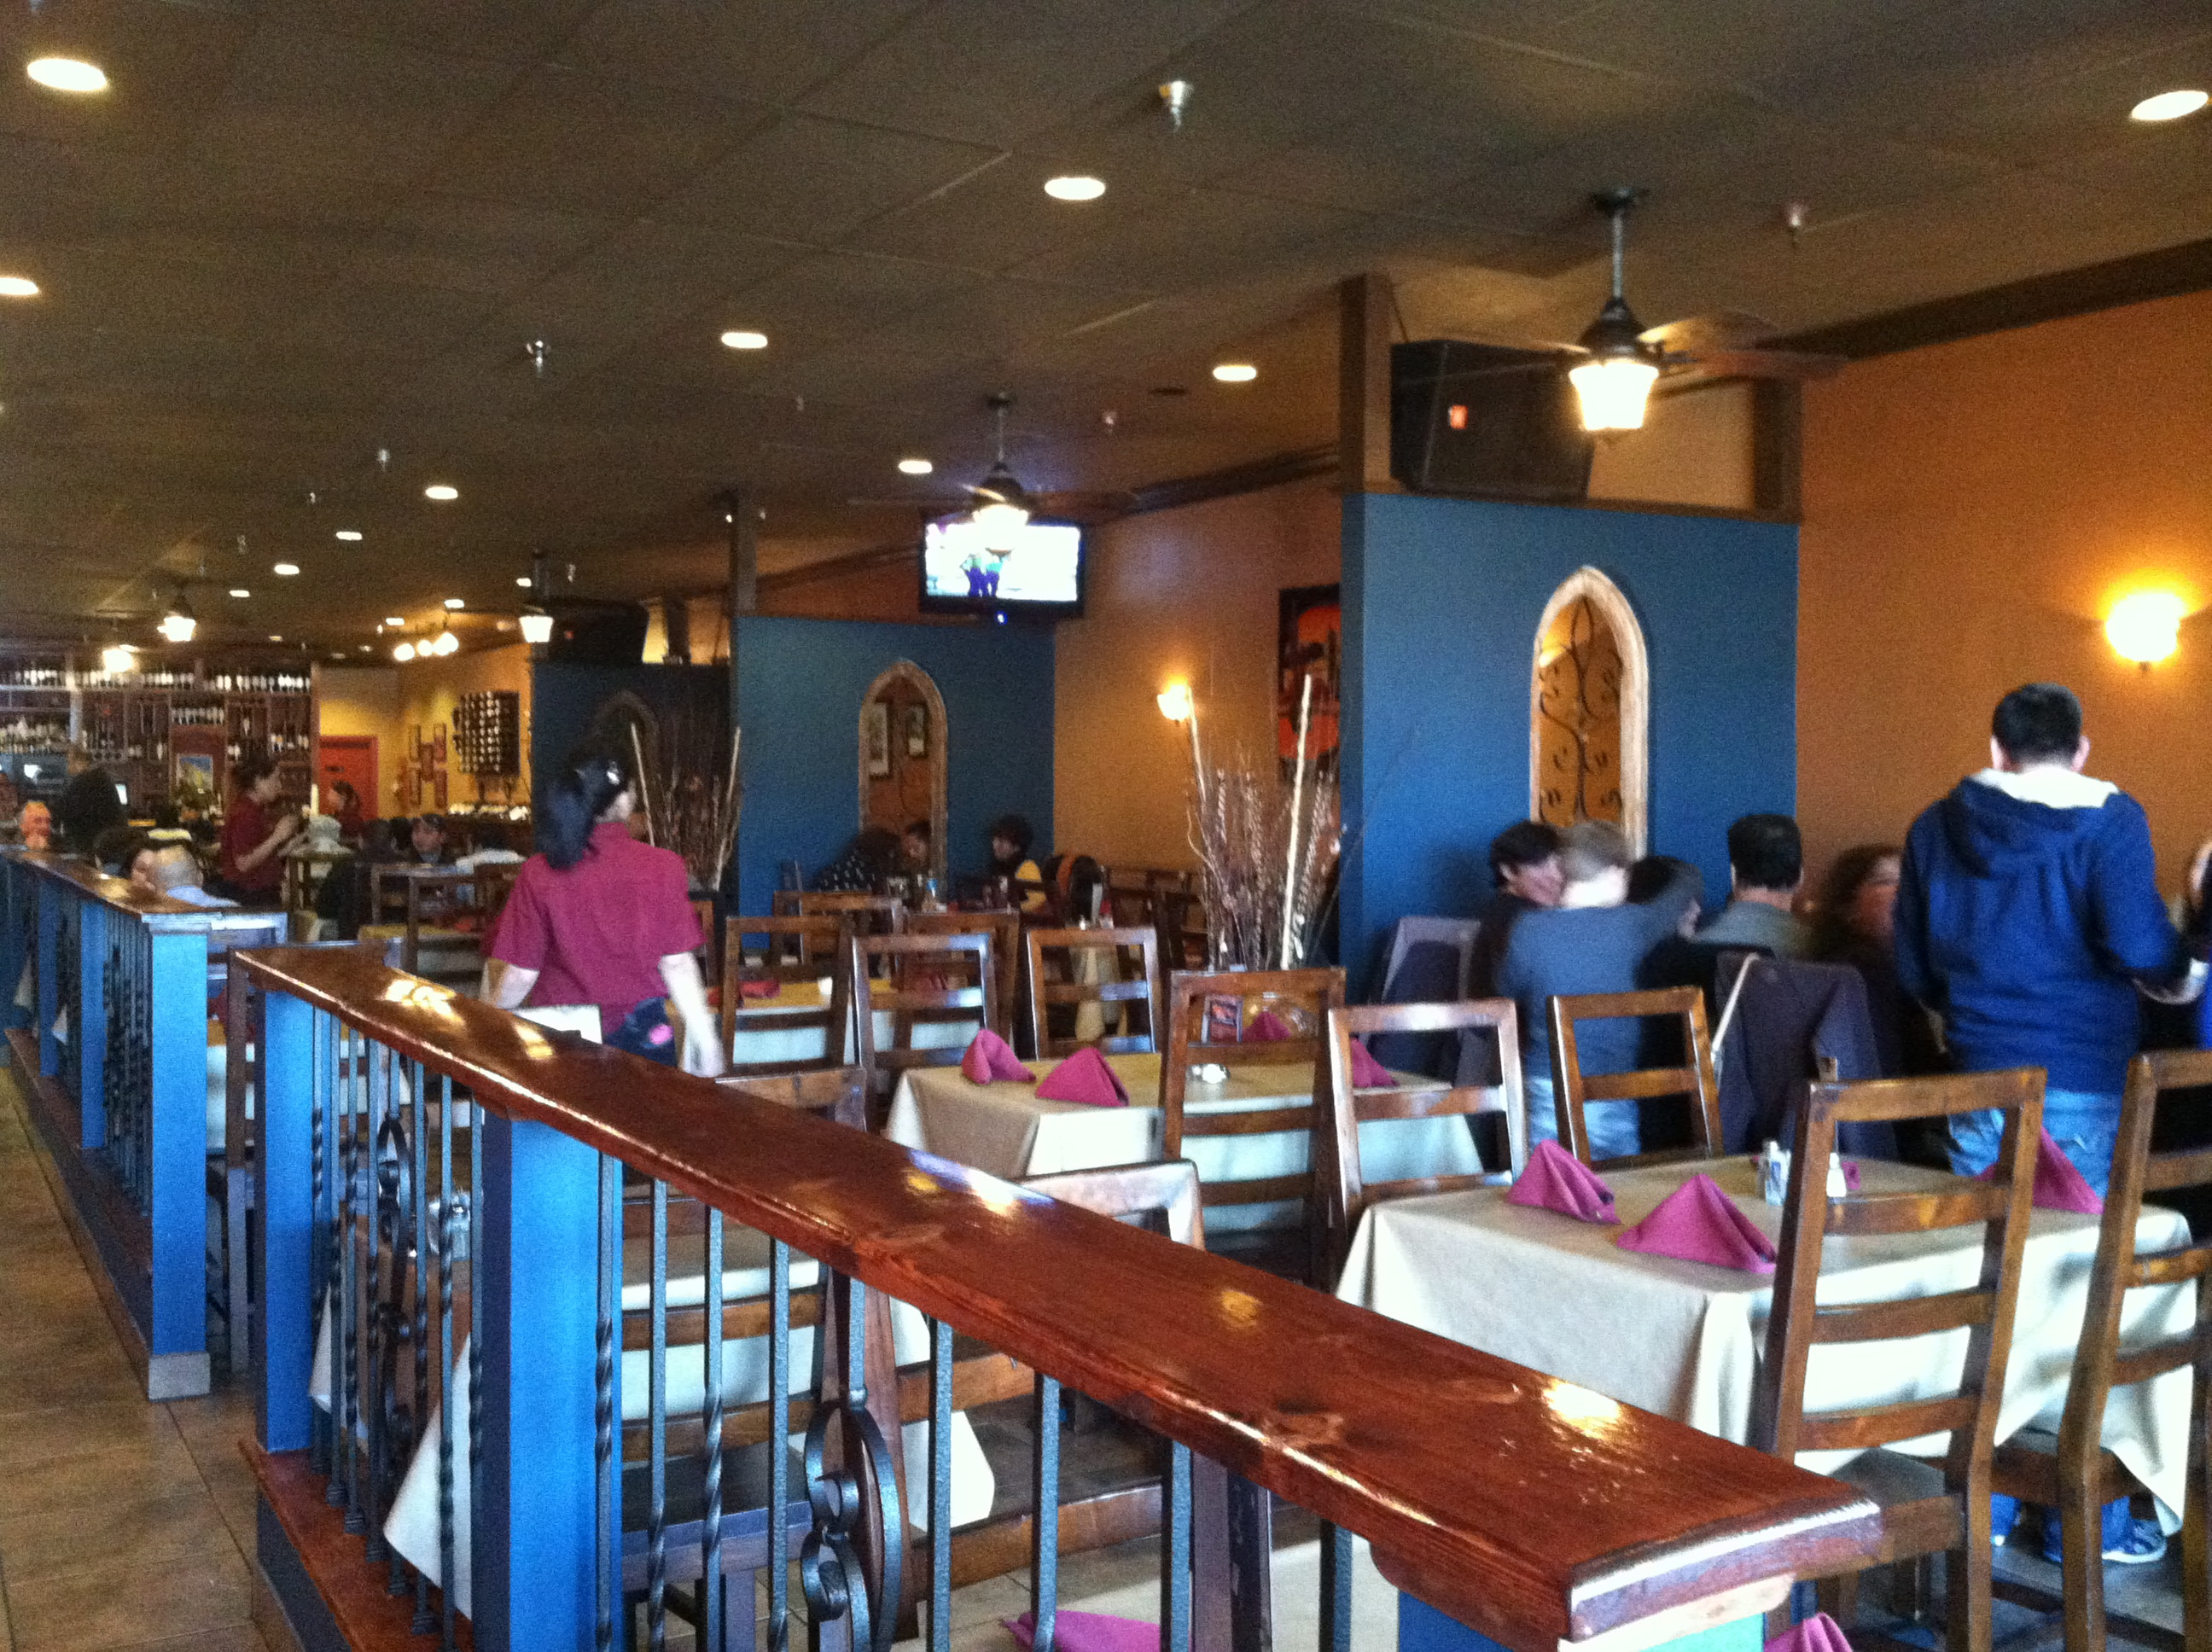 Best ideas about El Patio Rockville
. Save or Pin Restaurants Now.